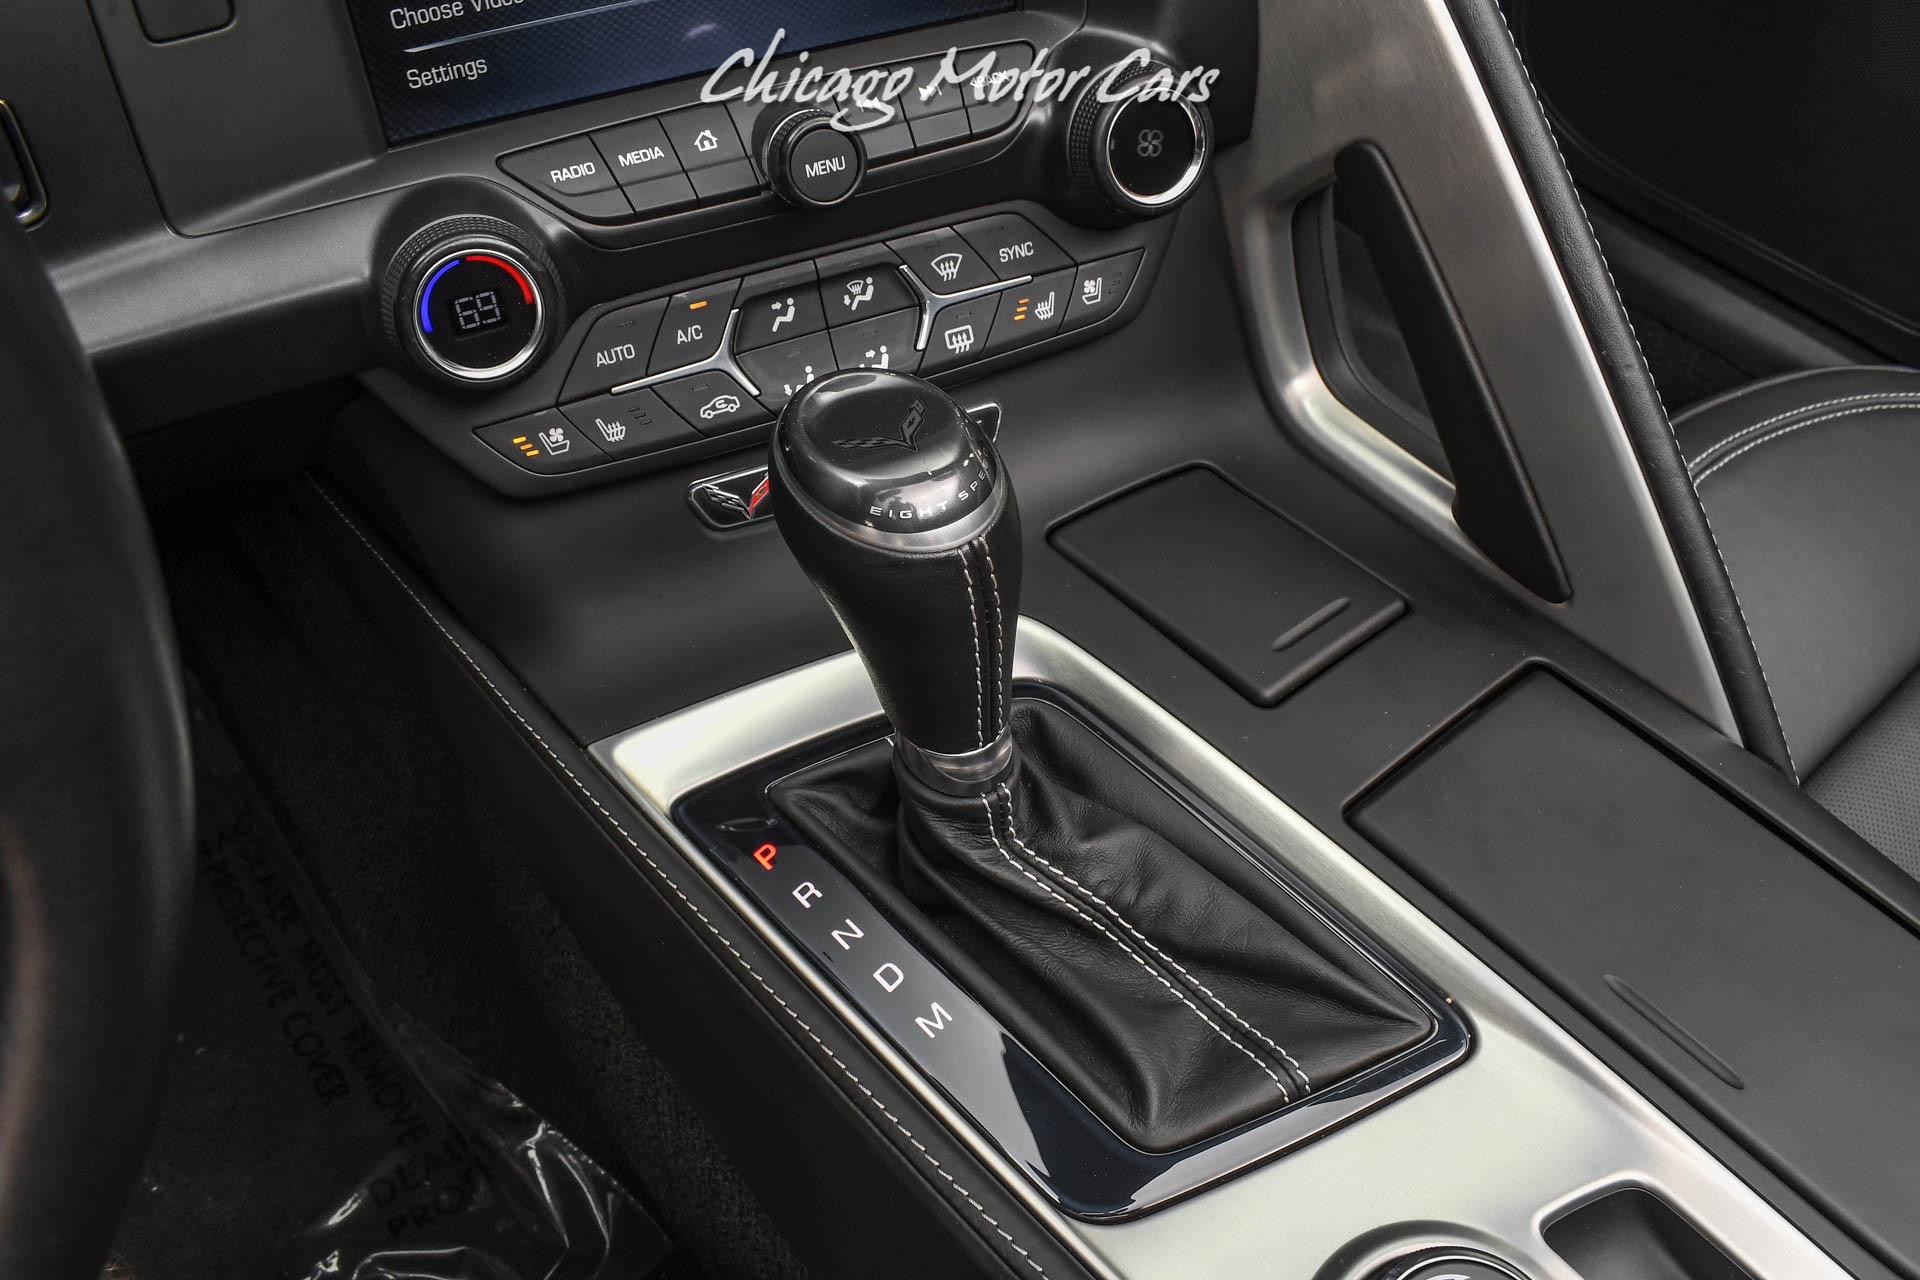 Used-2015-Chevrolet-Corvette-Stingray-Z51-3LT-Magnetic-Ride-Control-ONLY-19k-Miles